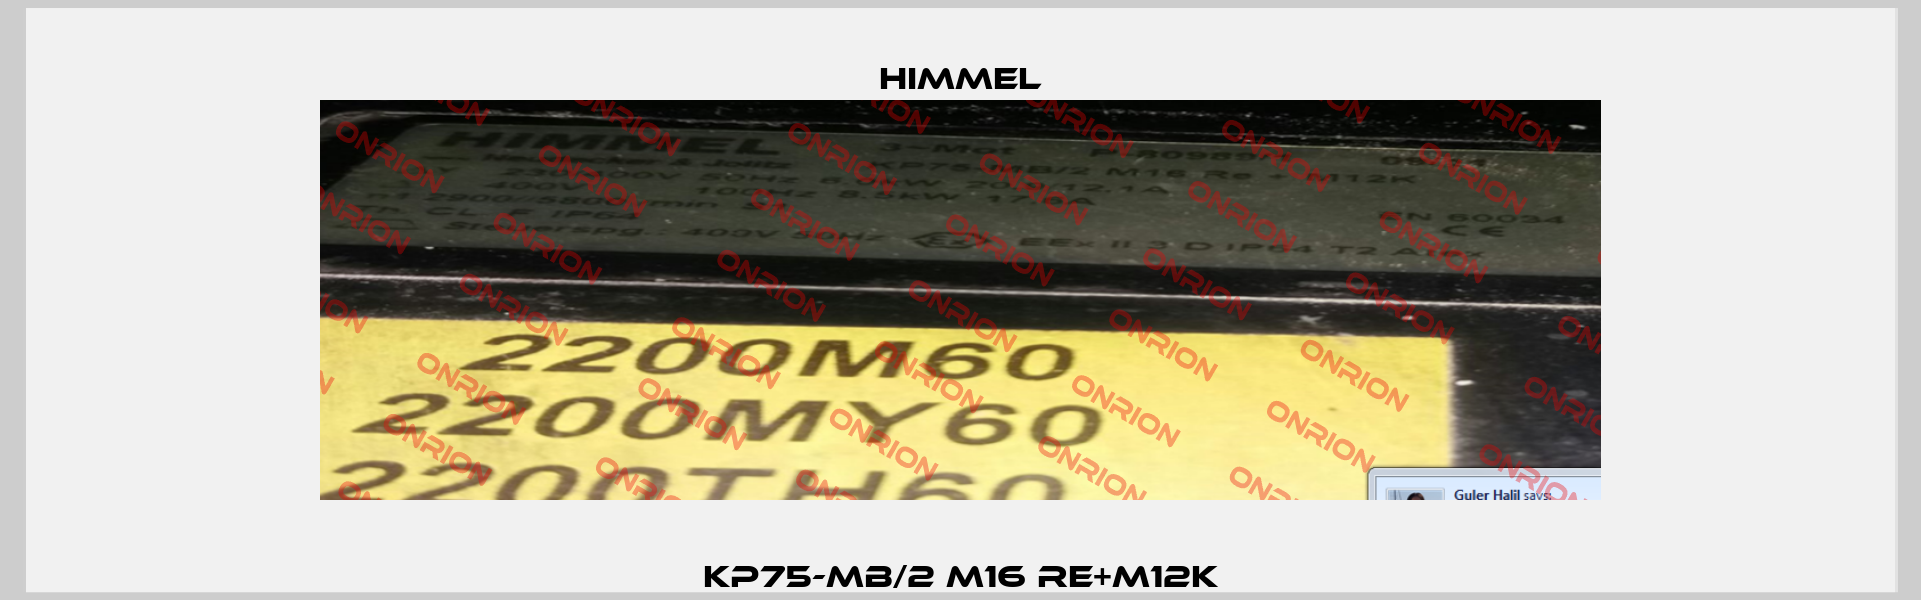 KP75-MB/2 M16 Re+M12K HIMMEL